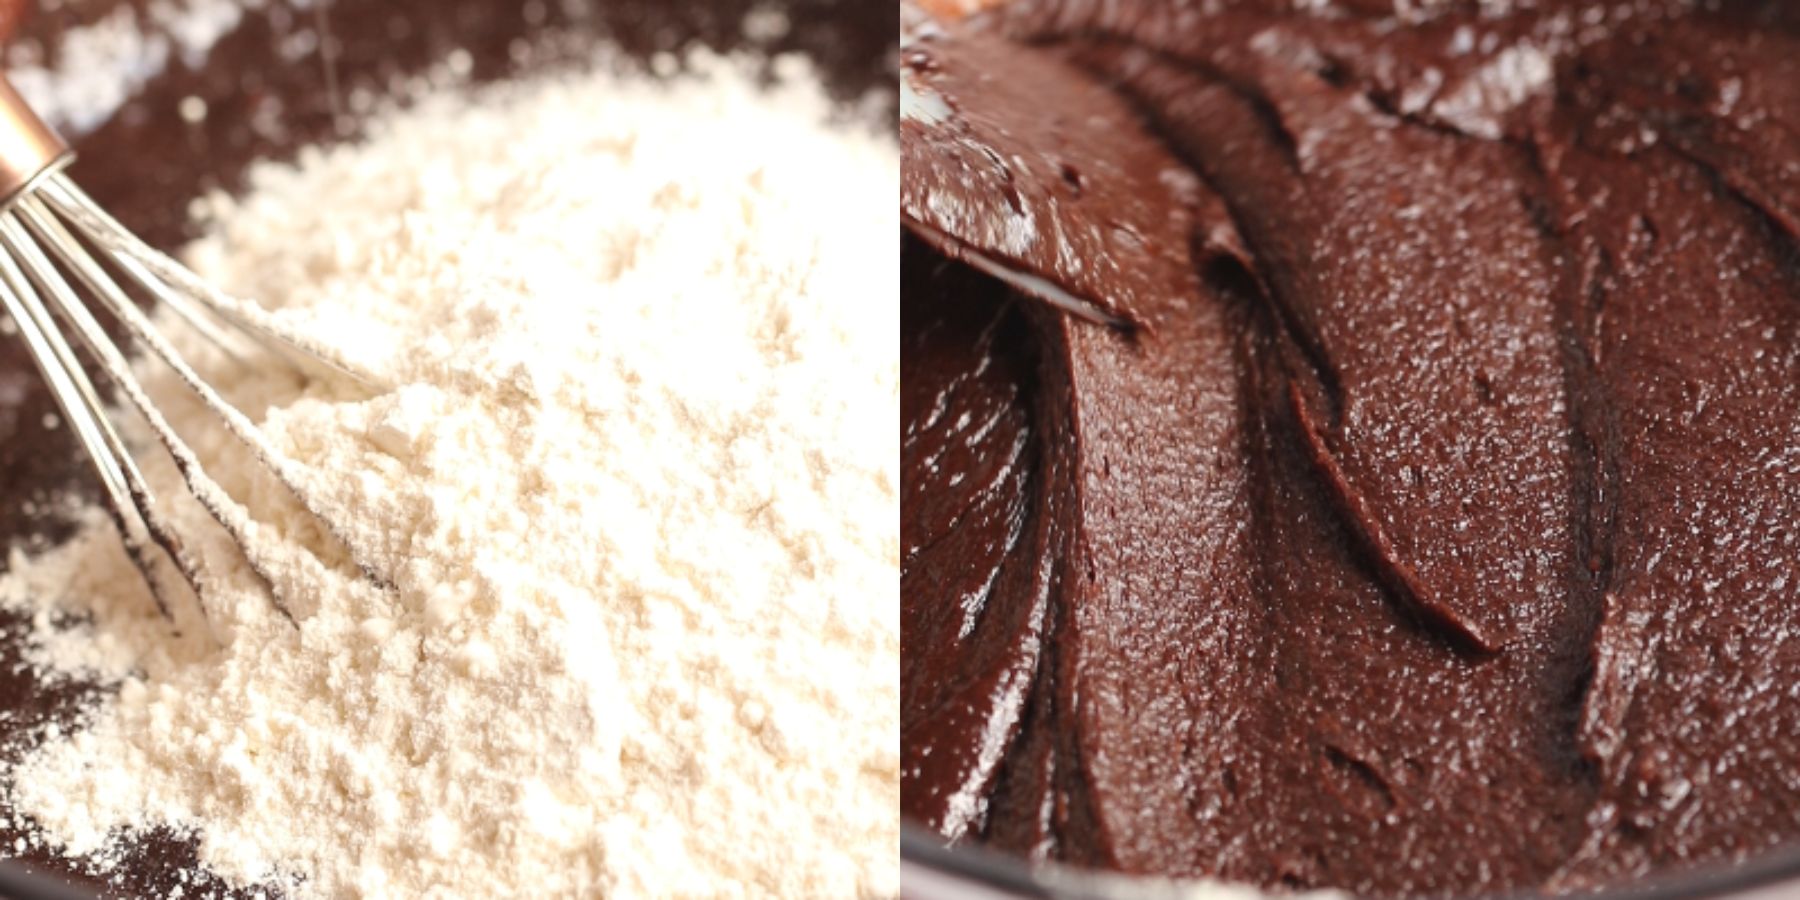 Brownies process shots.